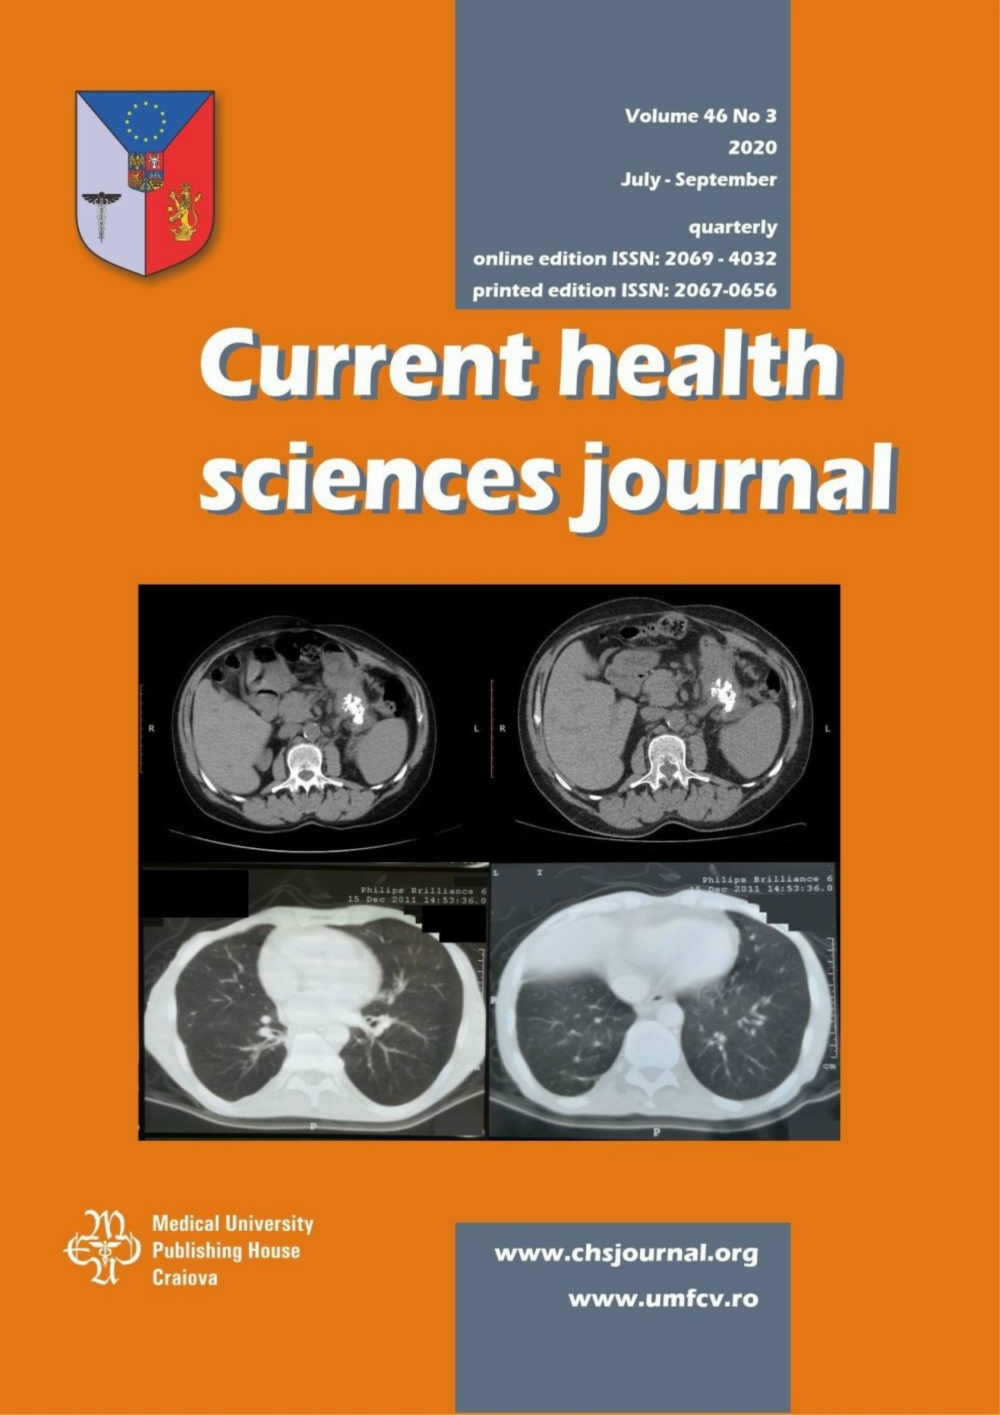 Current Health Sciences Journal, vol. 46 no. 3, 2020